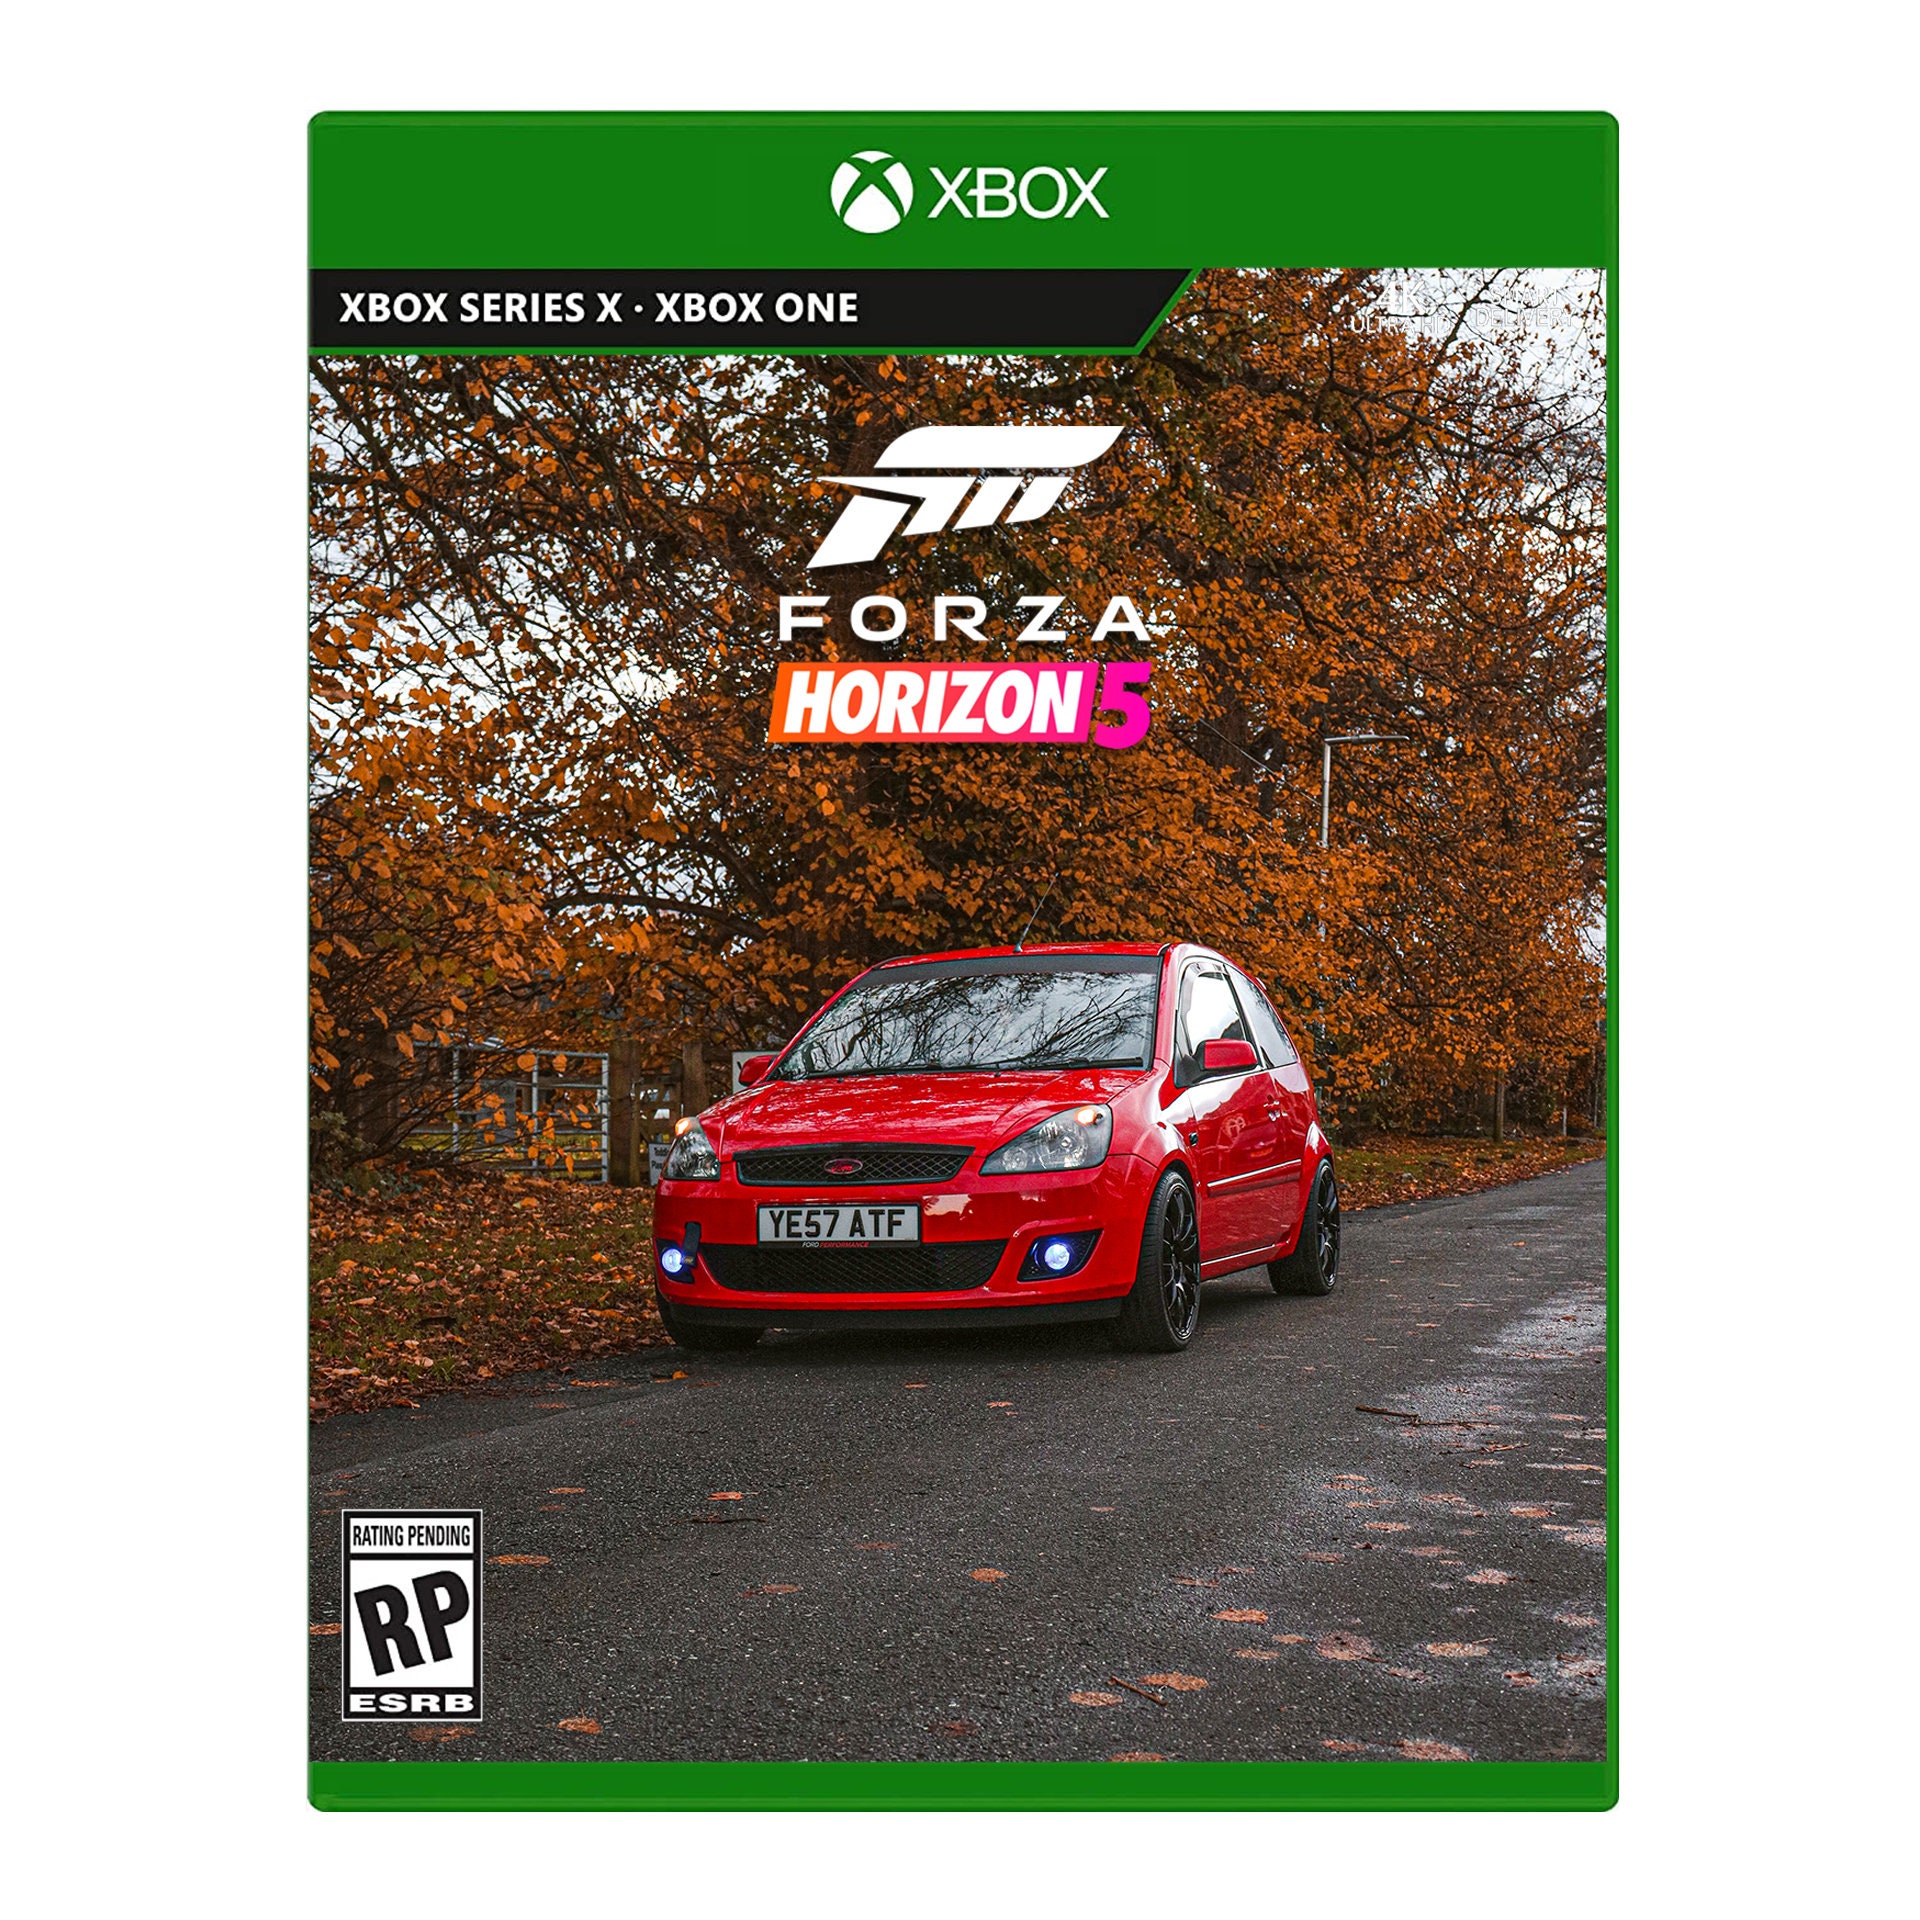 Forza Horizon 5 Face Masks for Sale